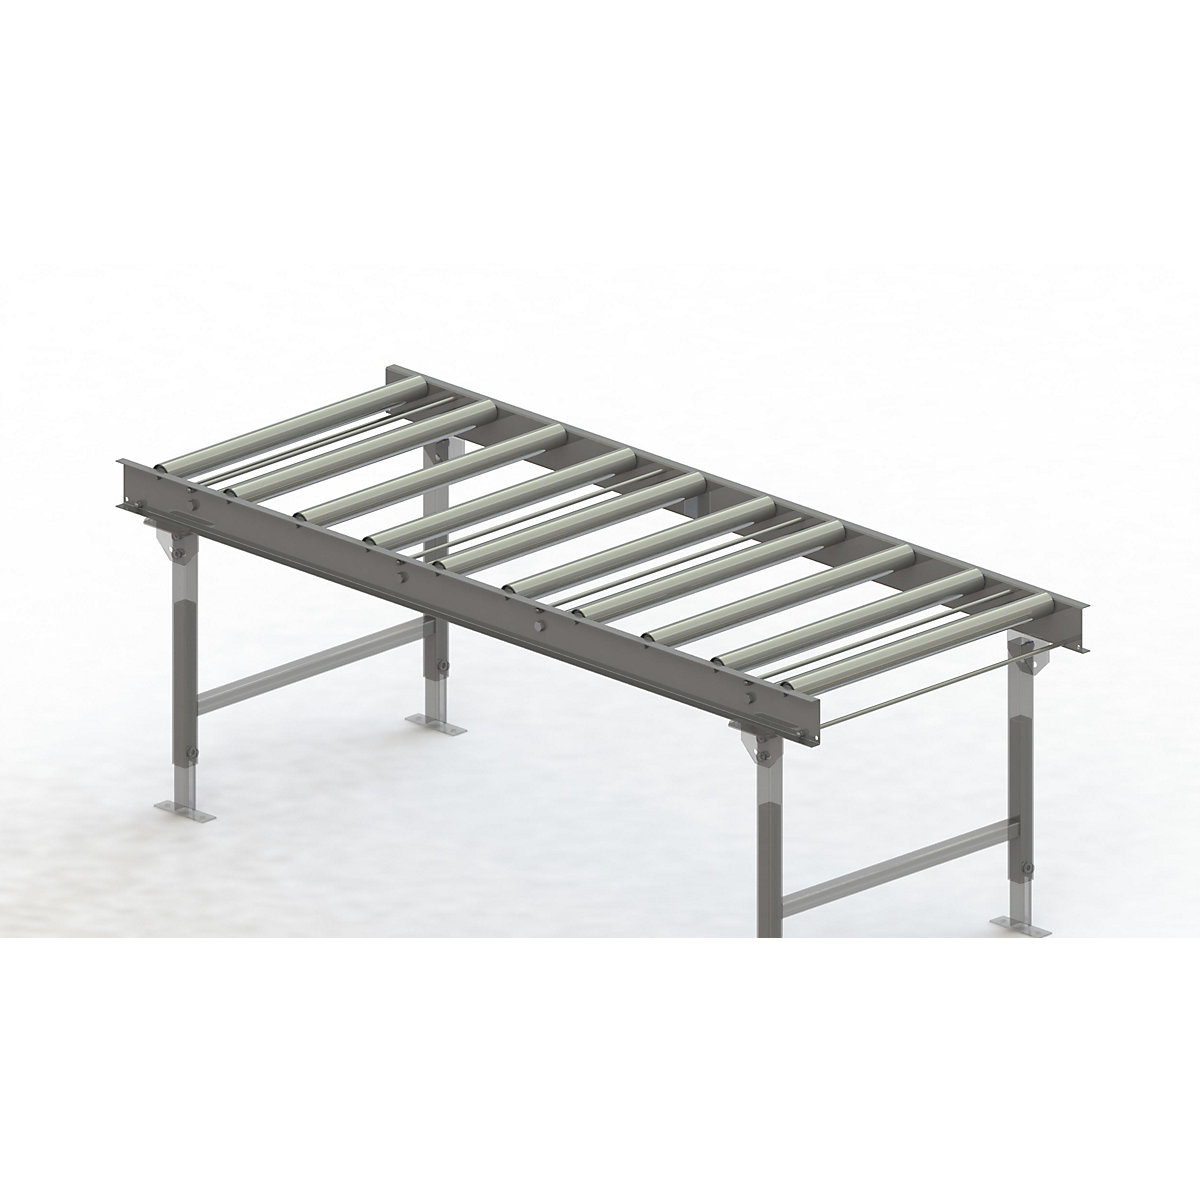 Gura – Roller conveyor, steel frame with zinc plated steel rollers, track width 750 mm, distance between axles 200 mm, length 2 m